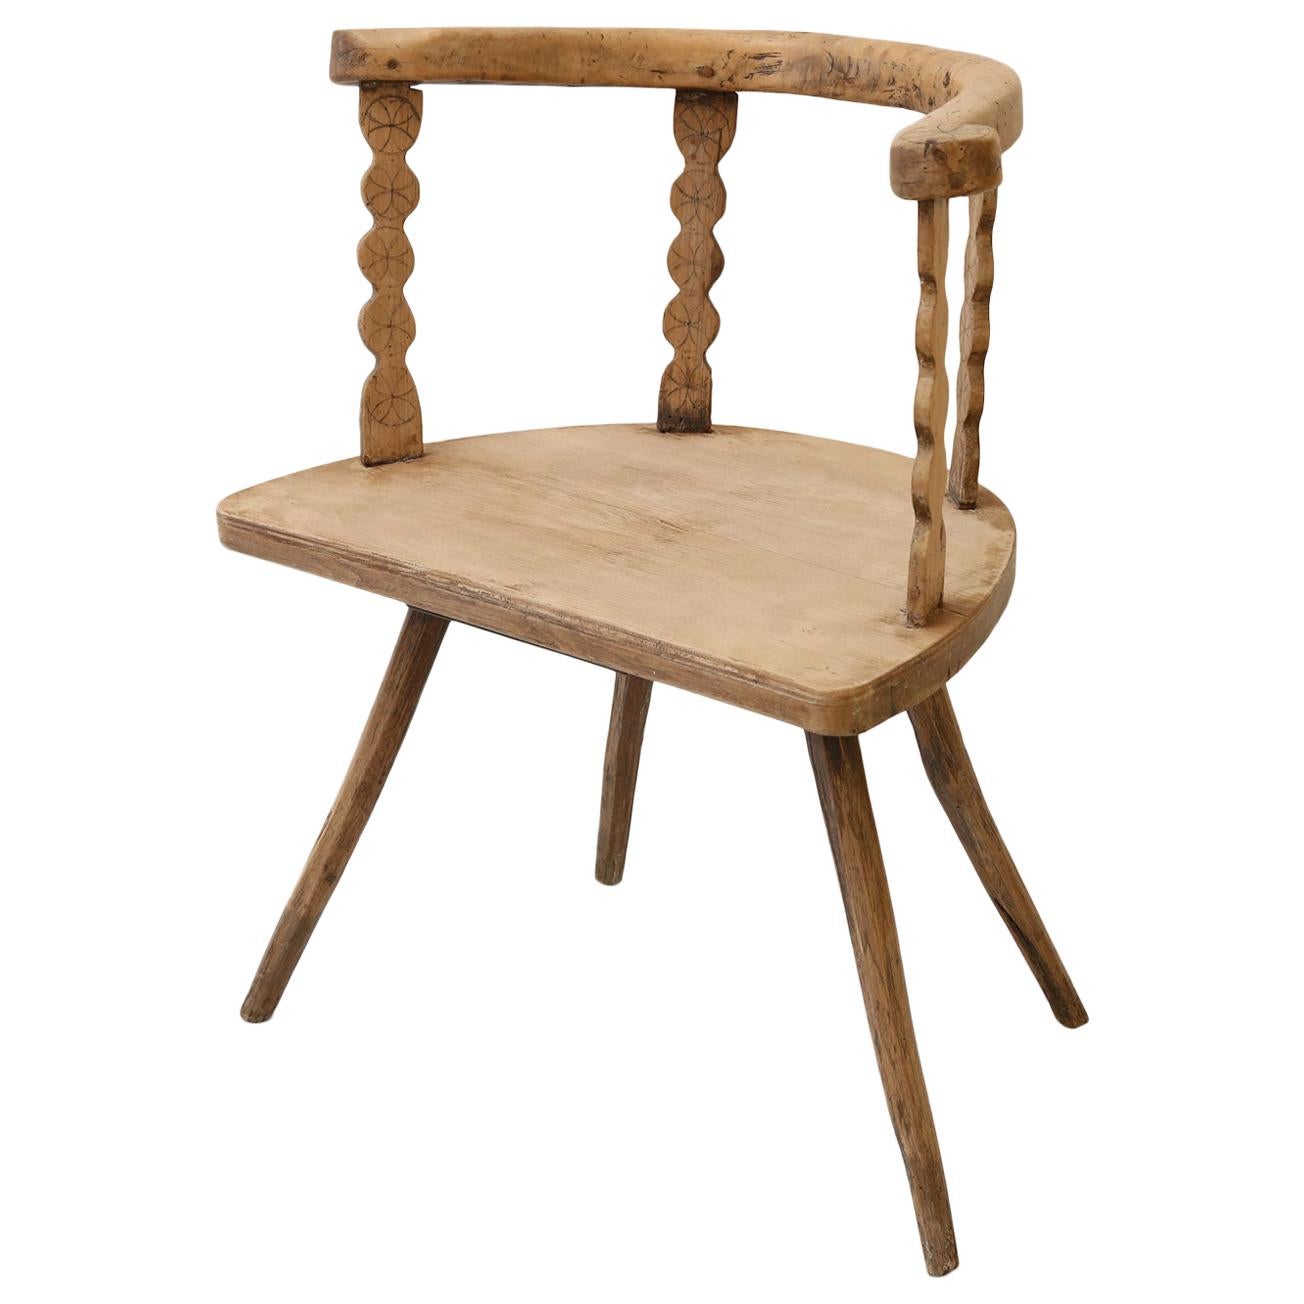 Swedish Vernacular Chair